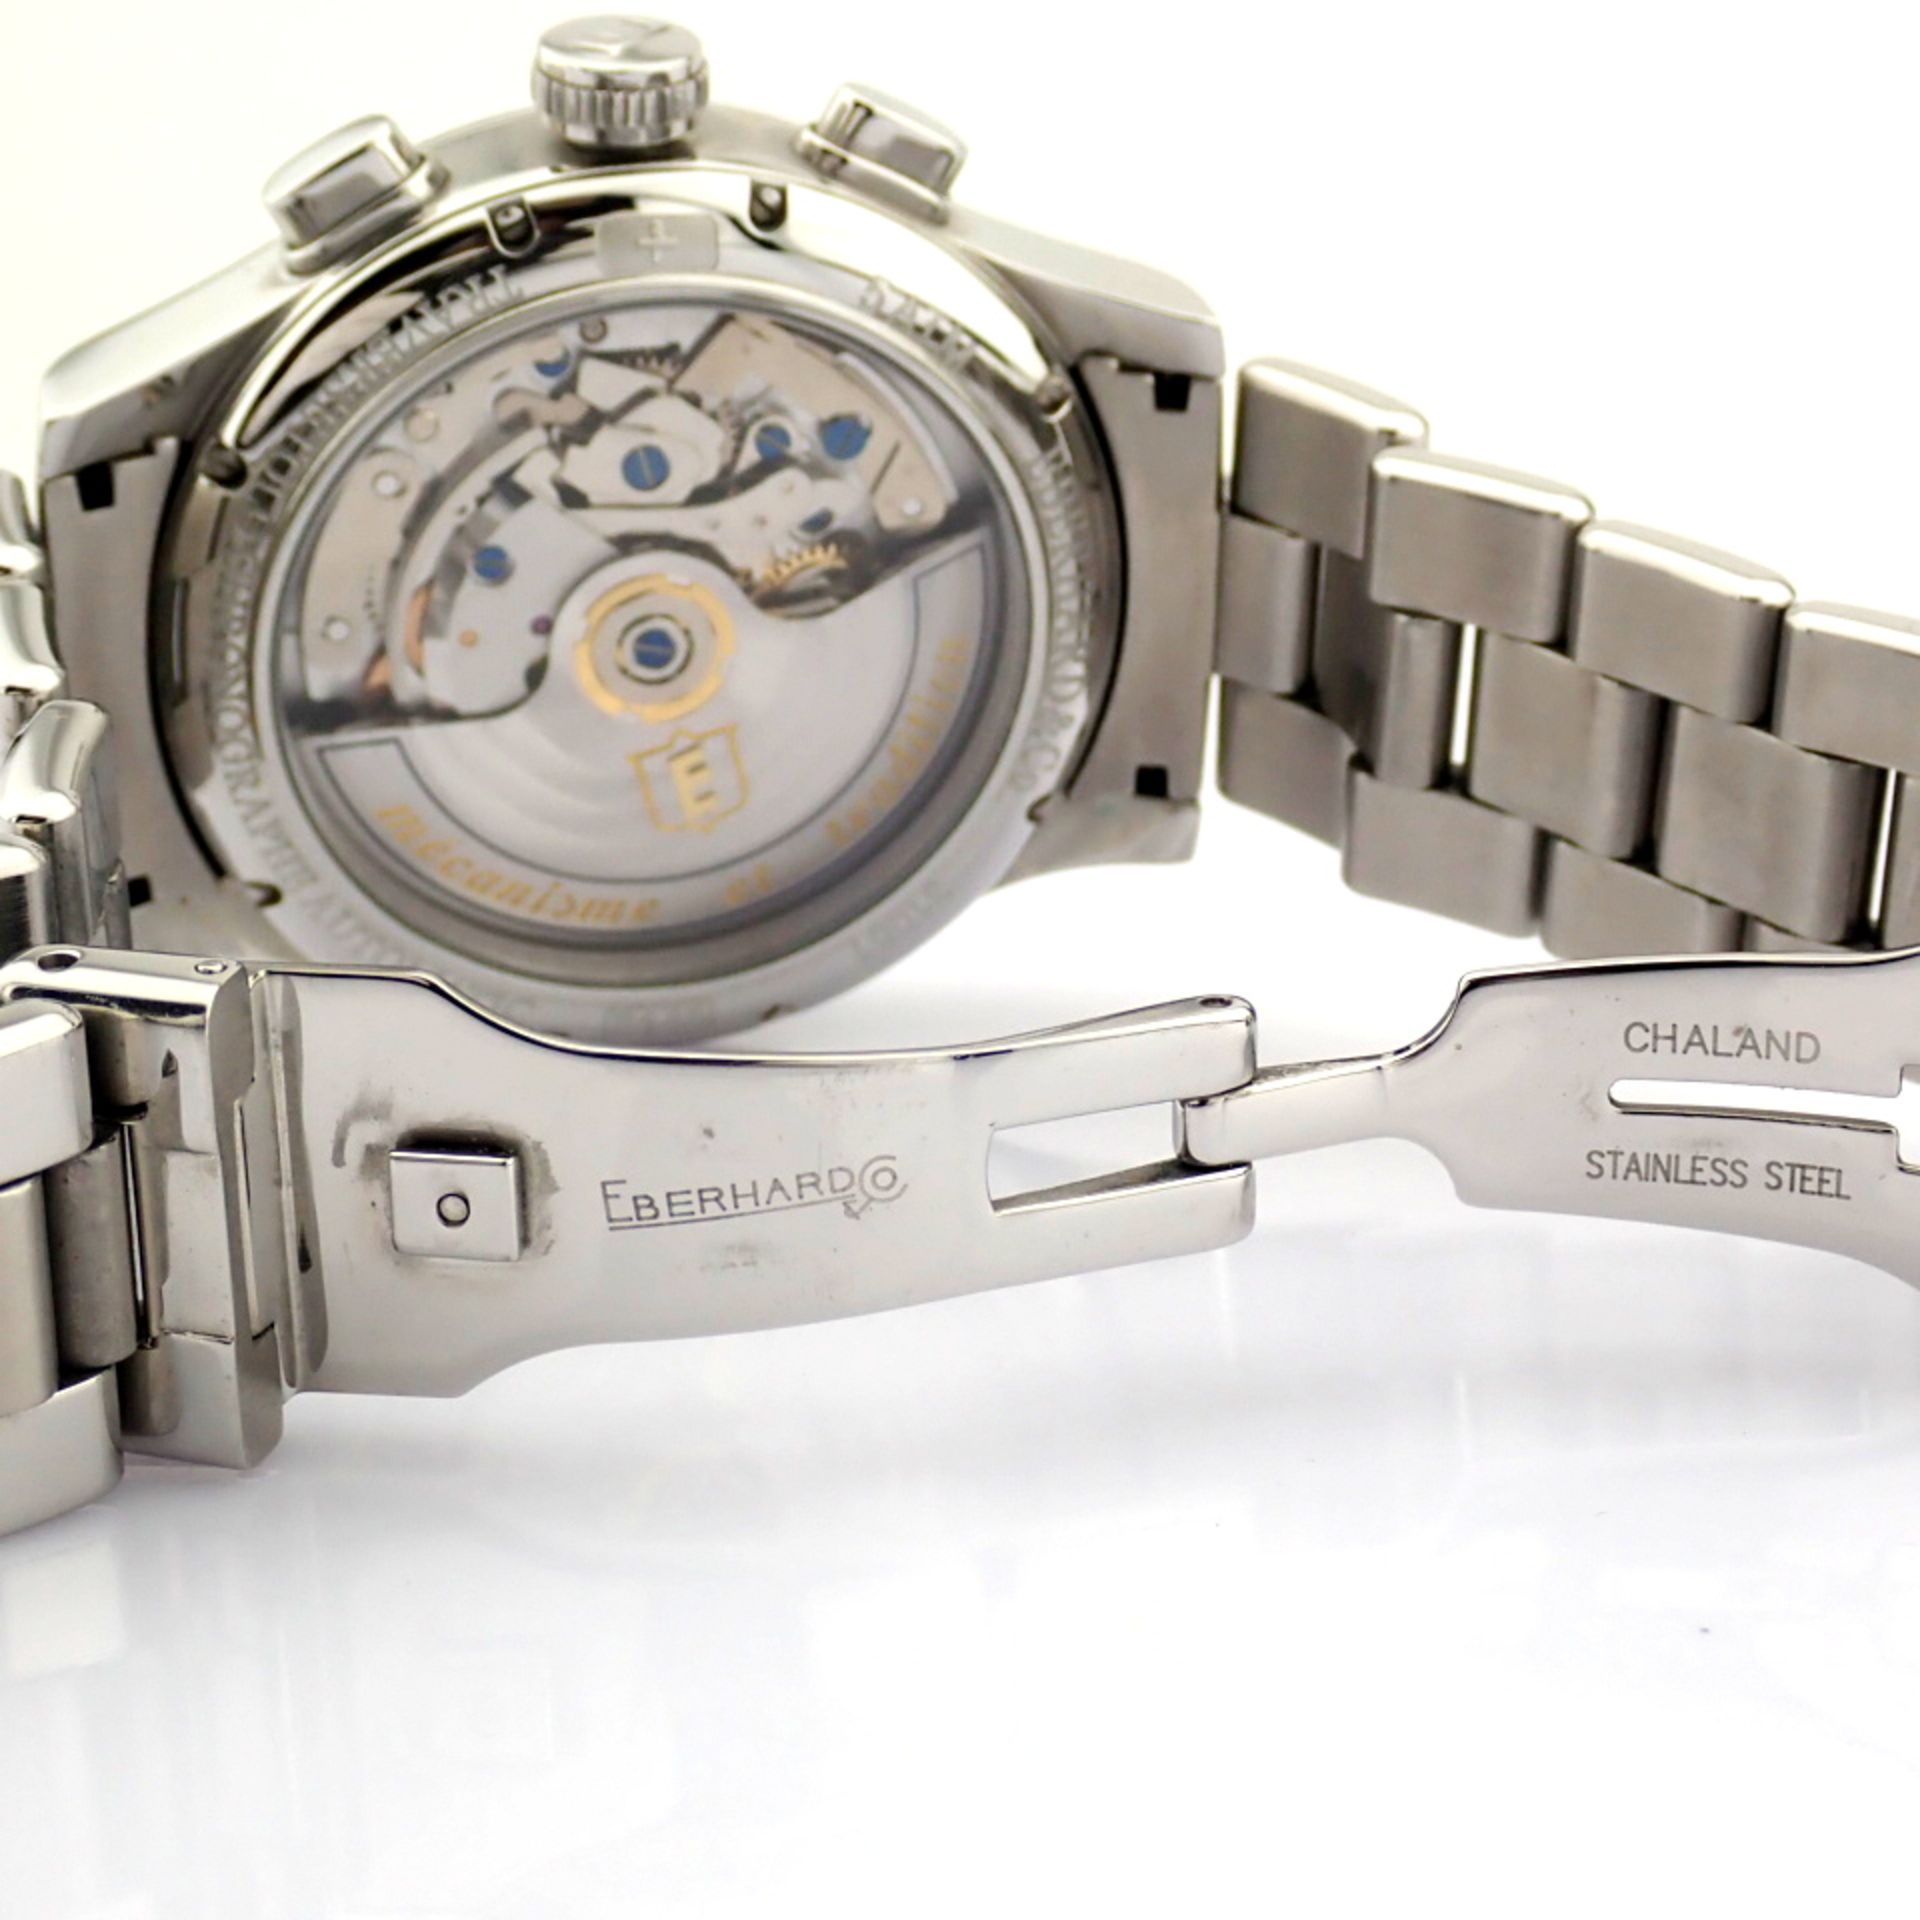 Eberhard & Co. / Traversetolo Chronograph Automatic - Gentlmen's Steel Wrist Watch - Image 10 of 11